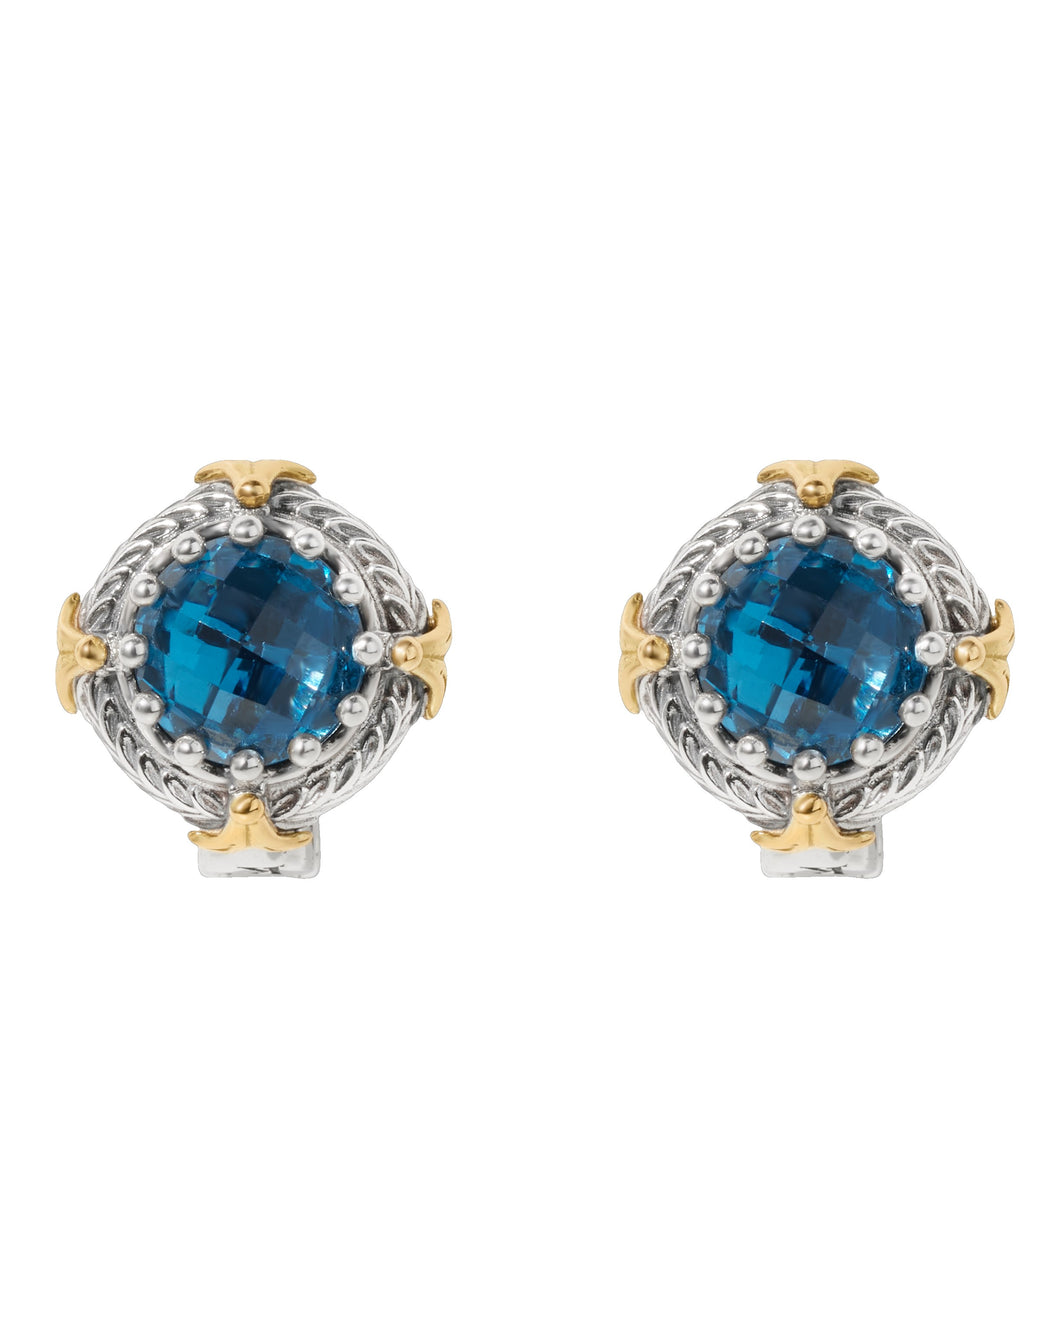 Konstantino Anthos Sterling Silver & 18K Yellow Gold Blue Spinel Earrings SKMK3218-478 MSRP $550